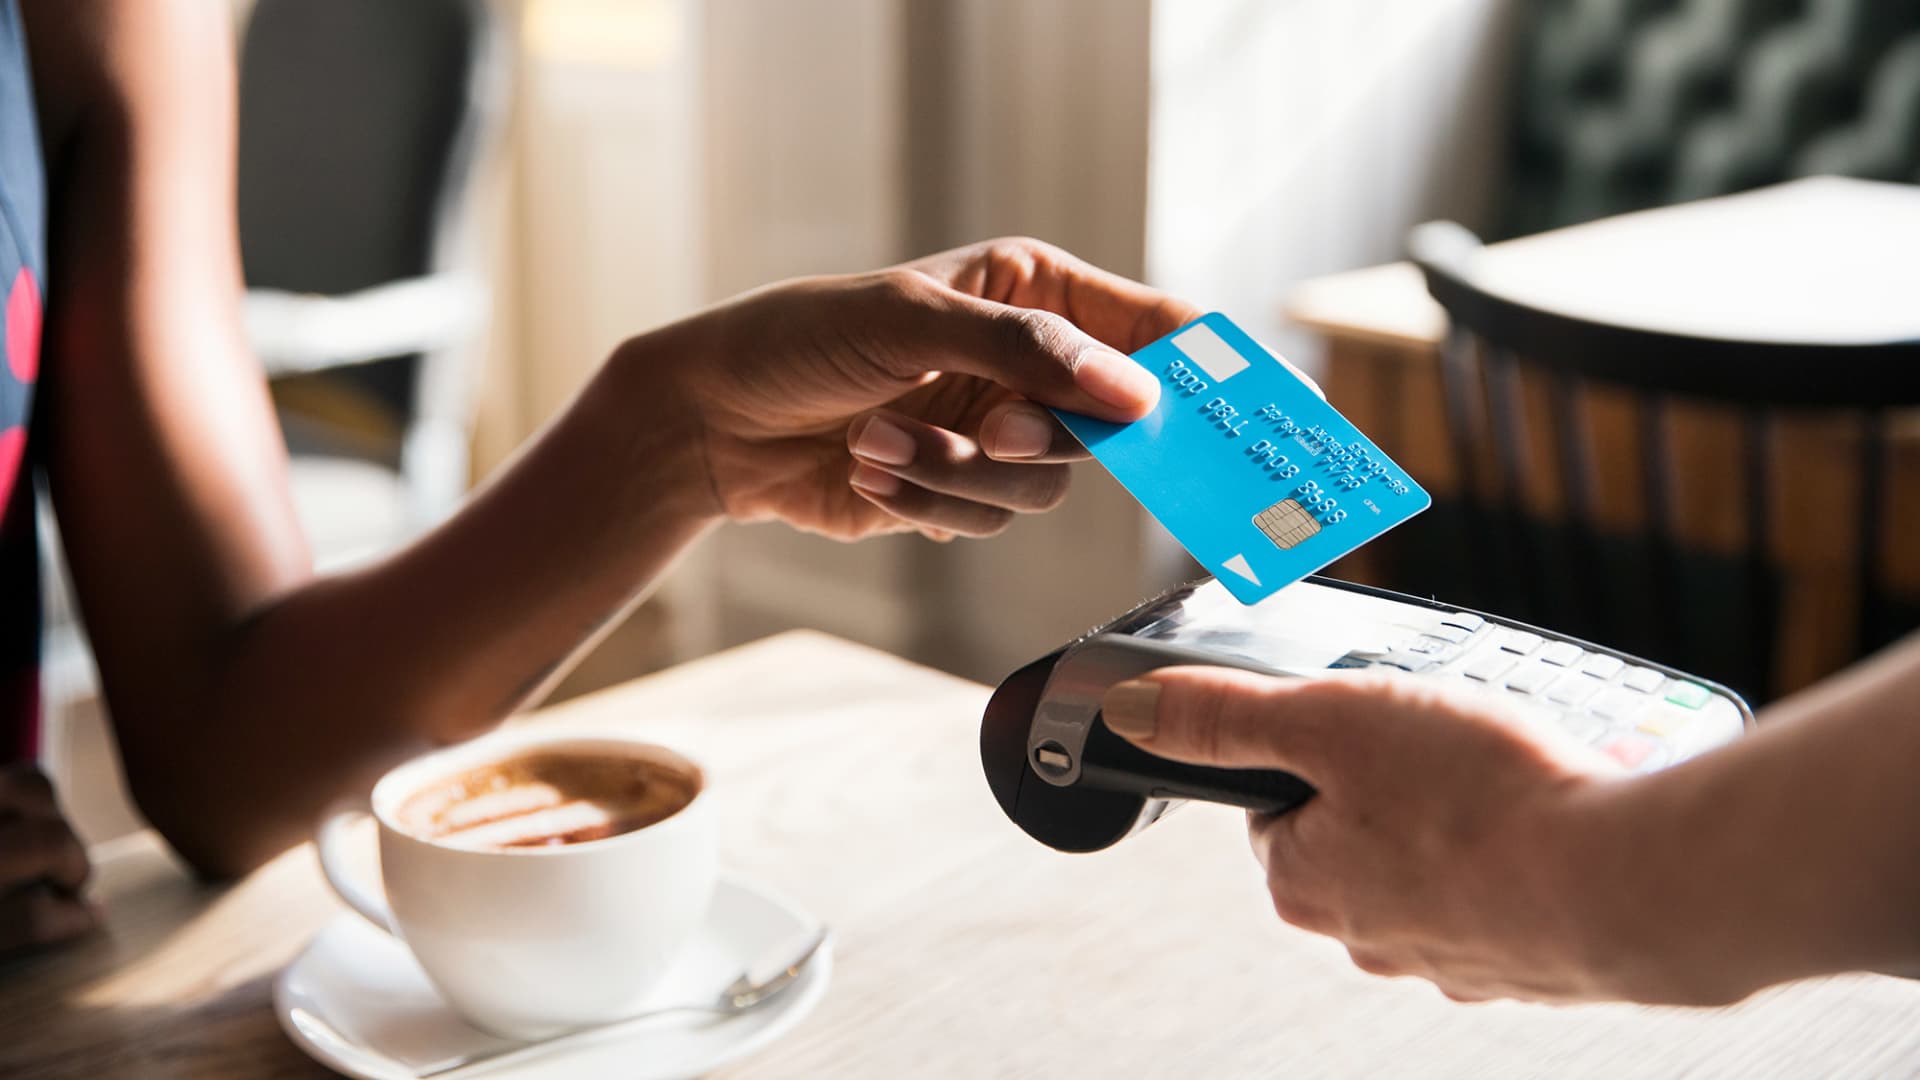 credit card merchant services